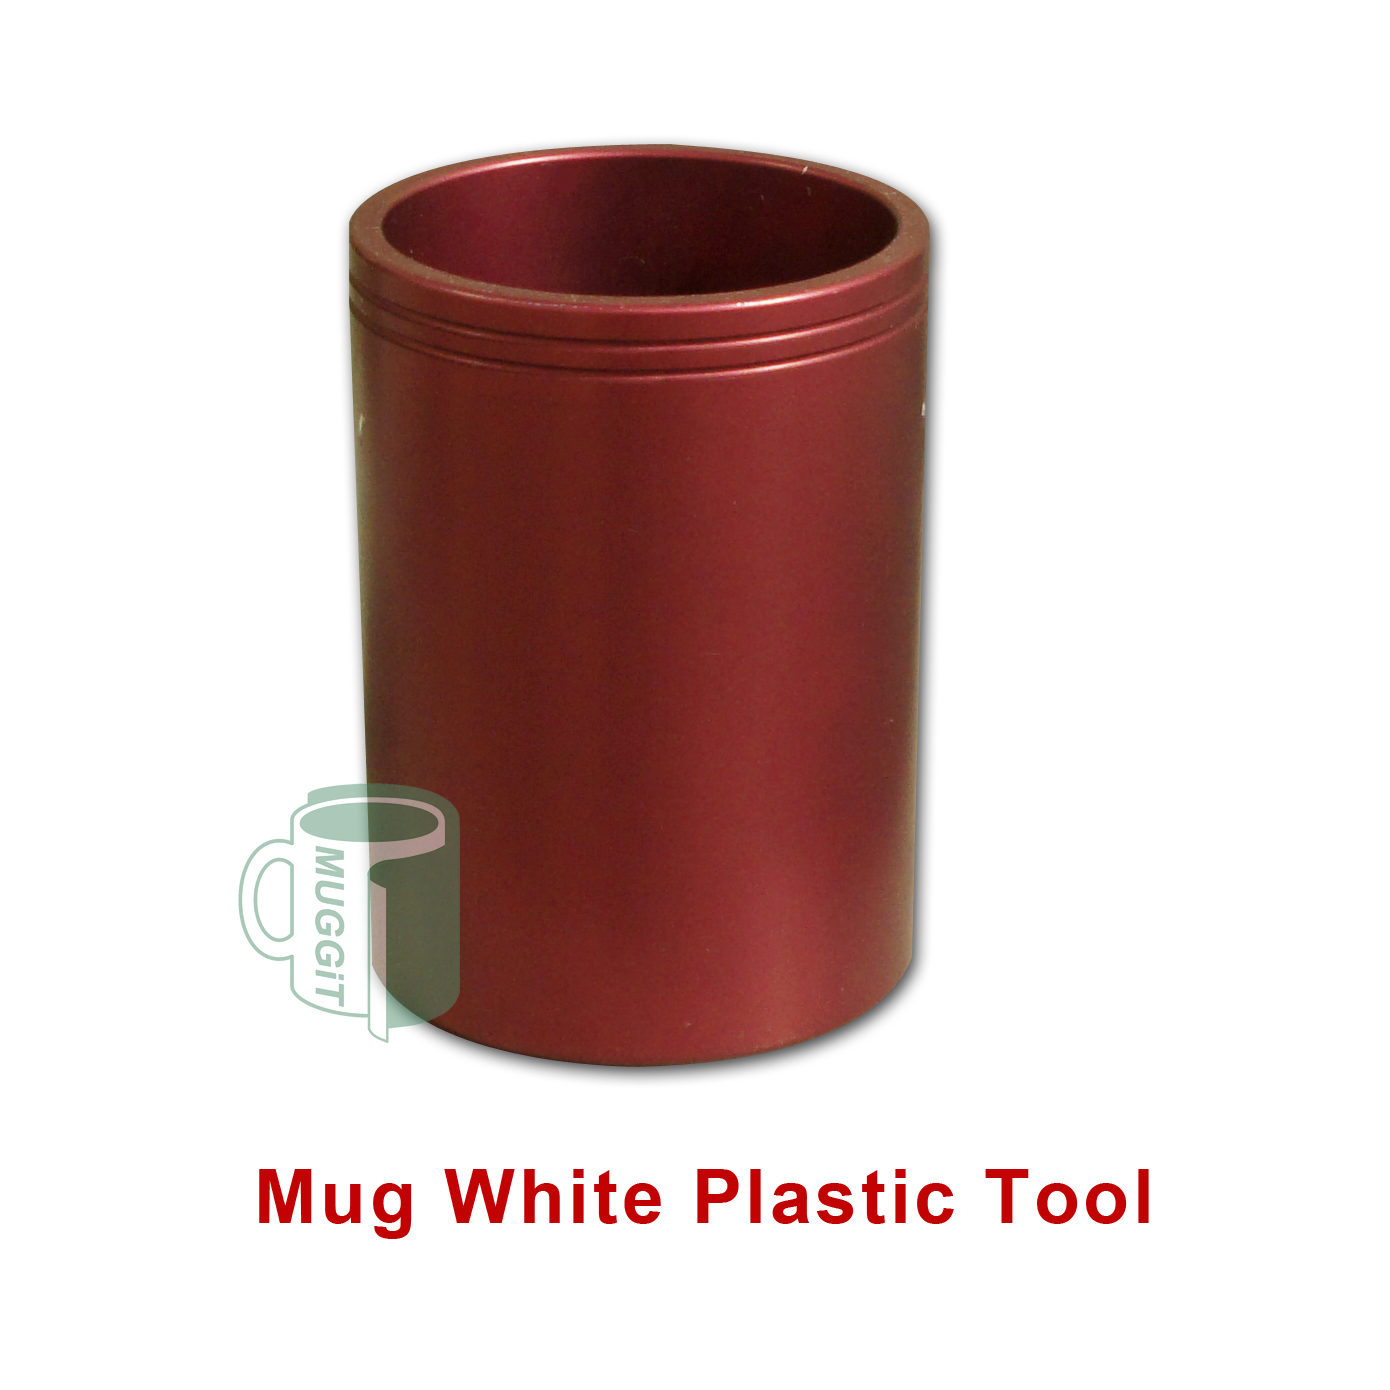 Mug White Plastic Tool